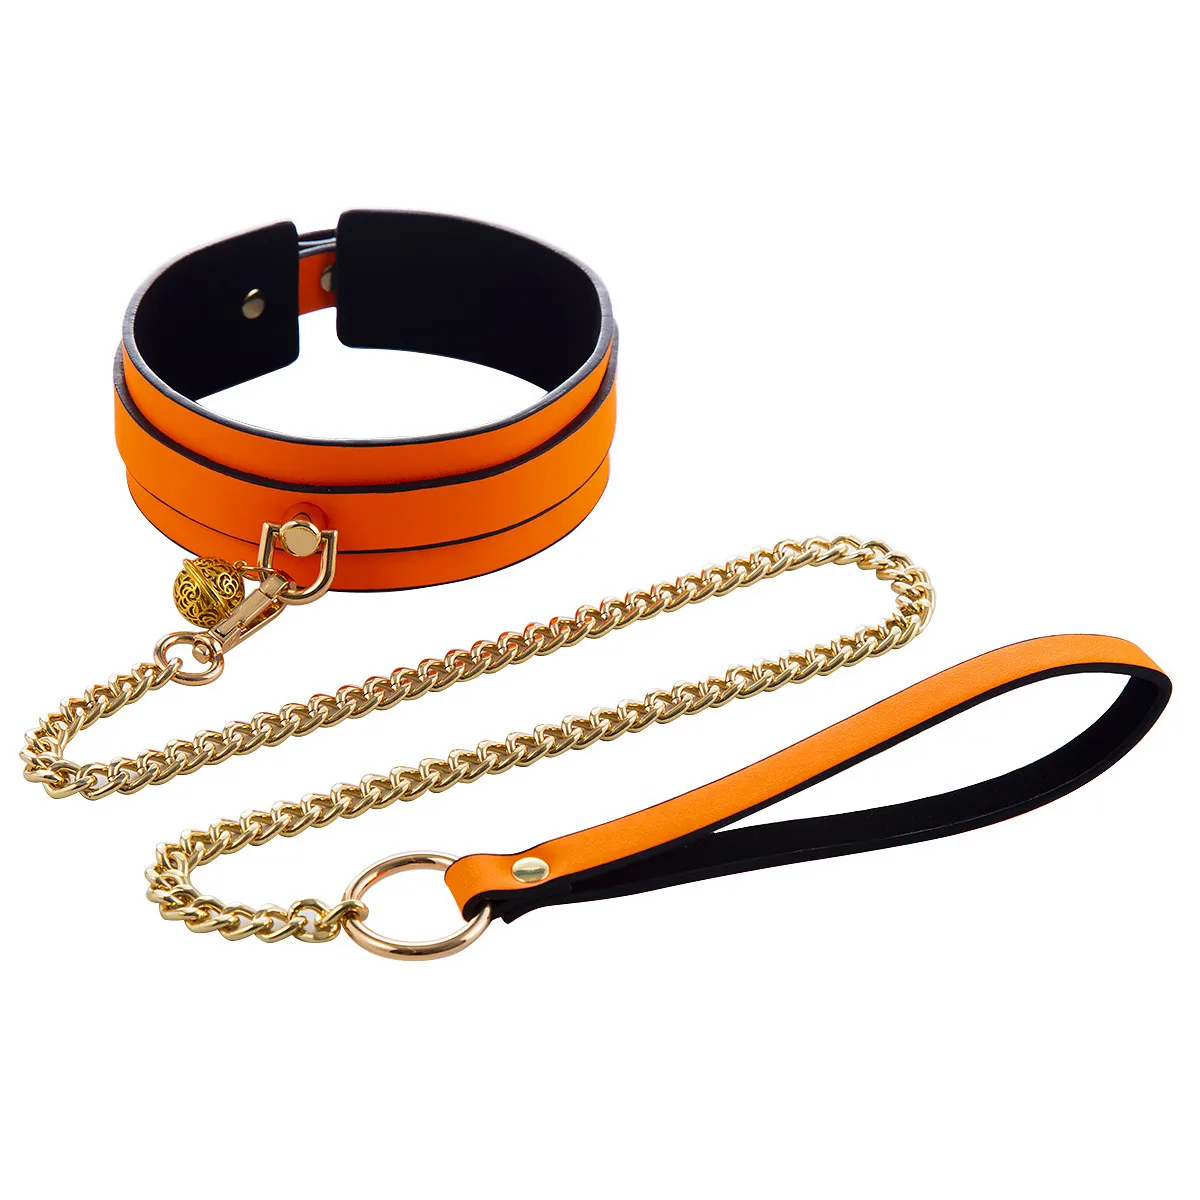 Custom locking slave restraint leather choker bondage collar w/ leash 